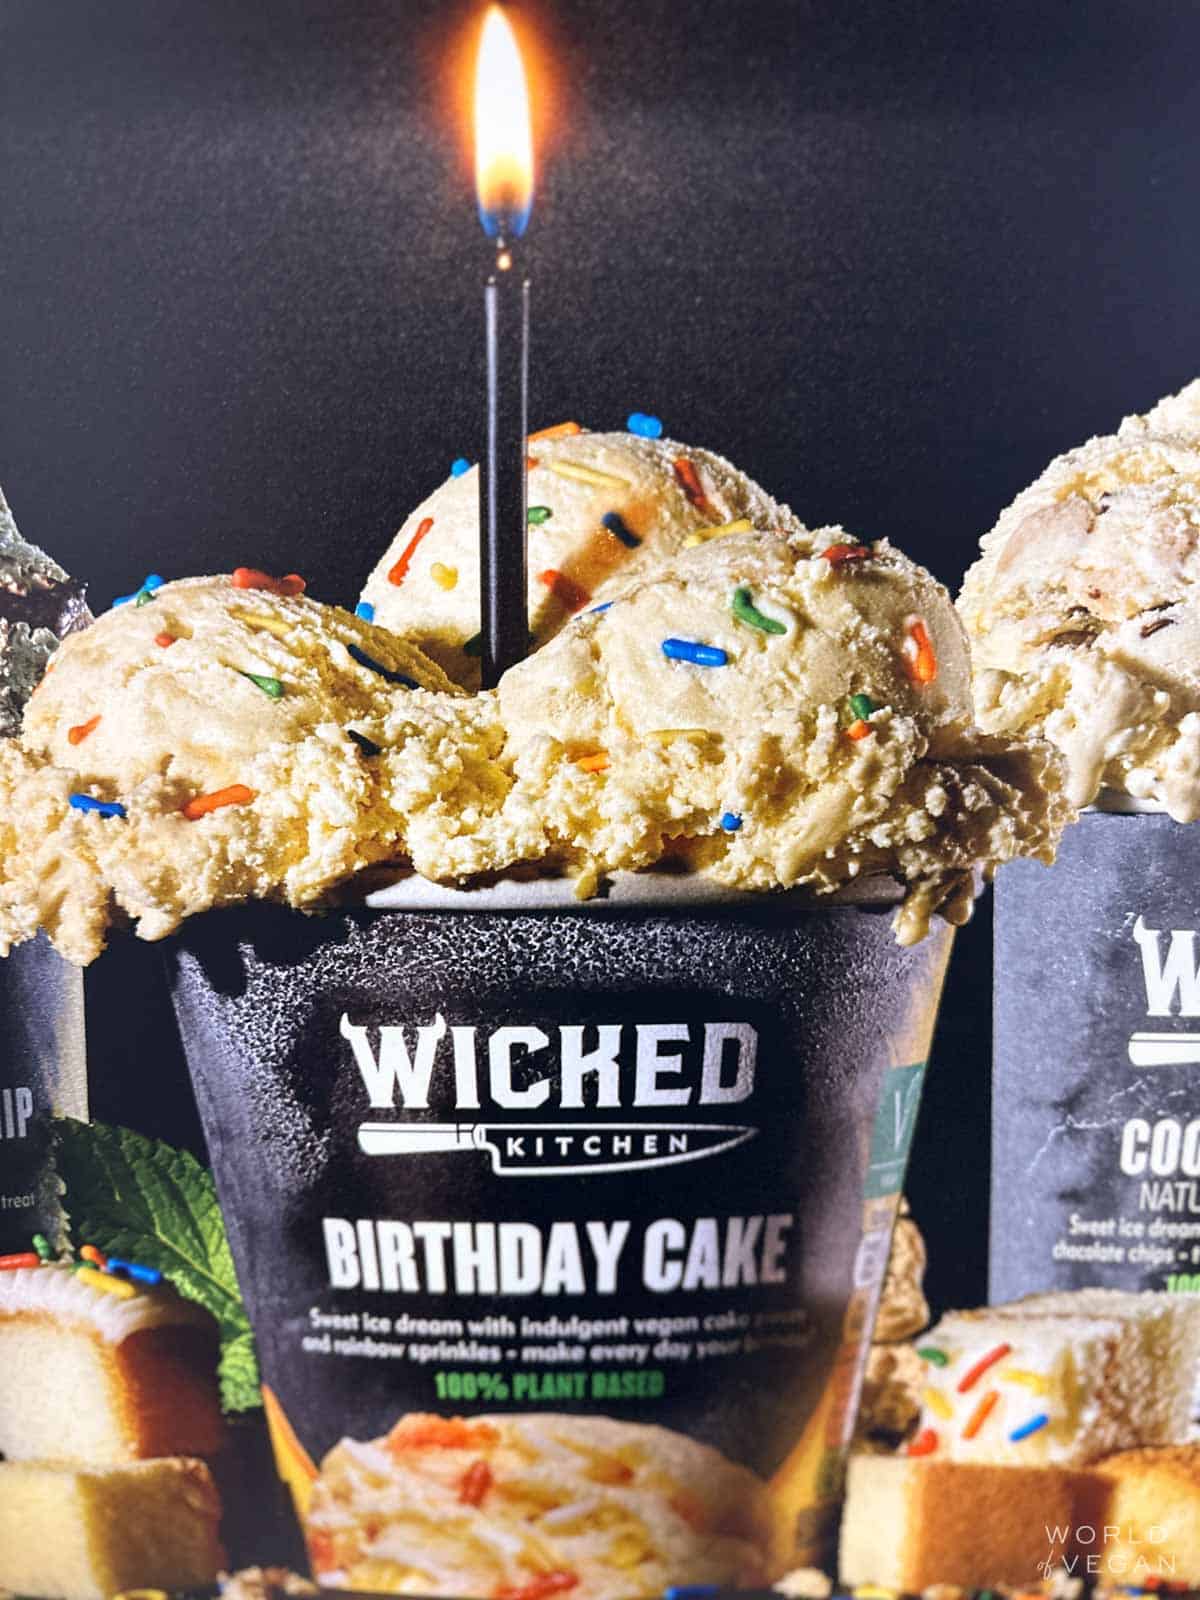 Wicked Kitchen brand Birthday Cake vegan ice cream.